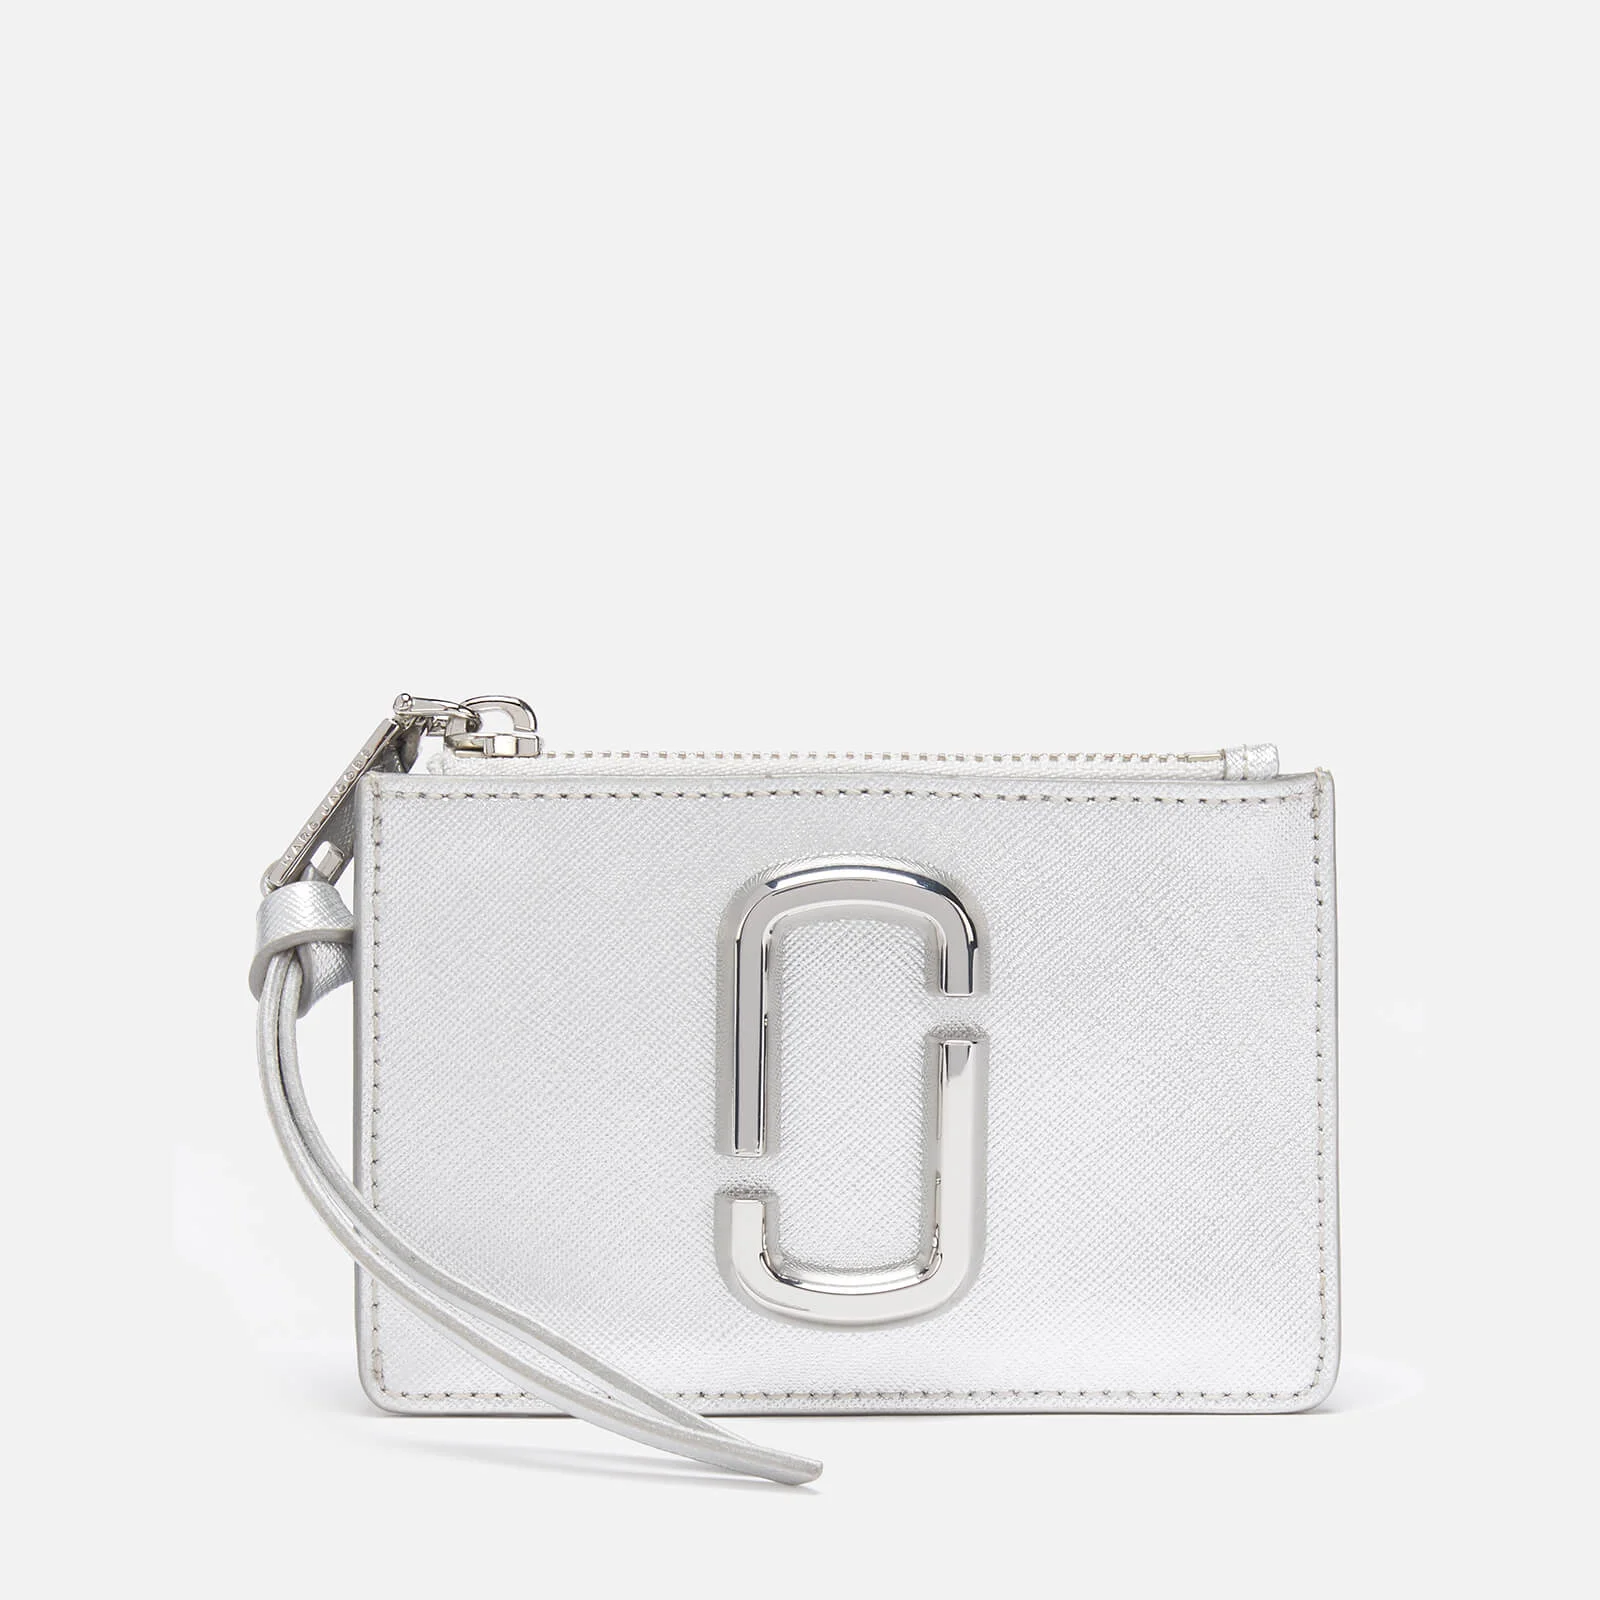 Marc Jacobs Women's Top Zip Multi Wallet - Silver Image 1